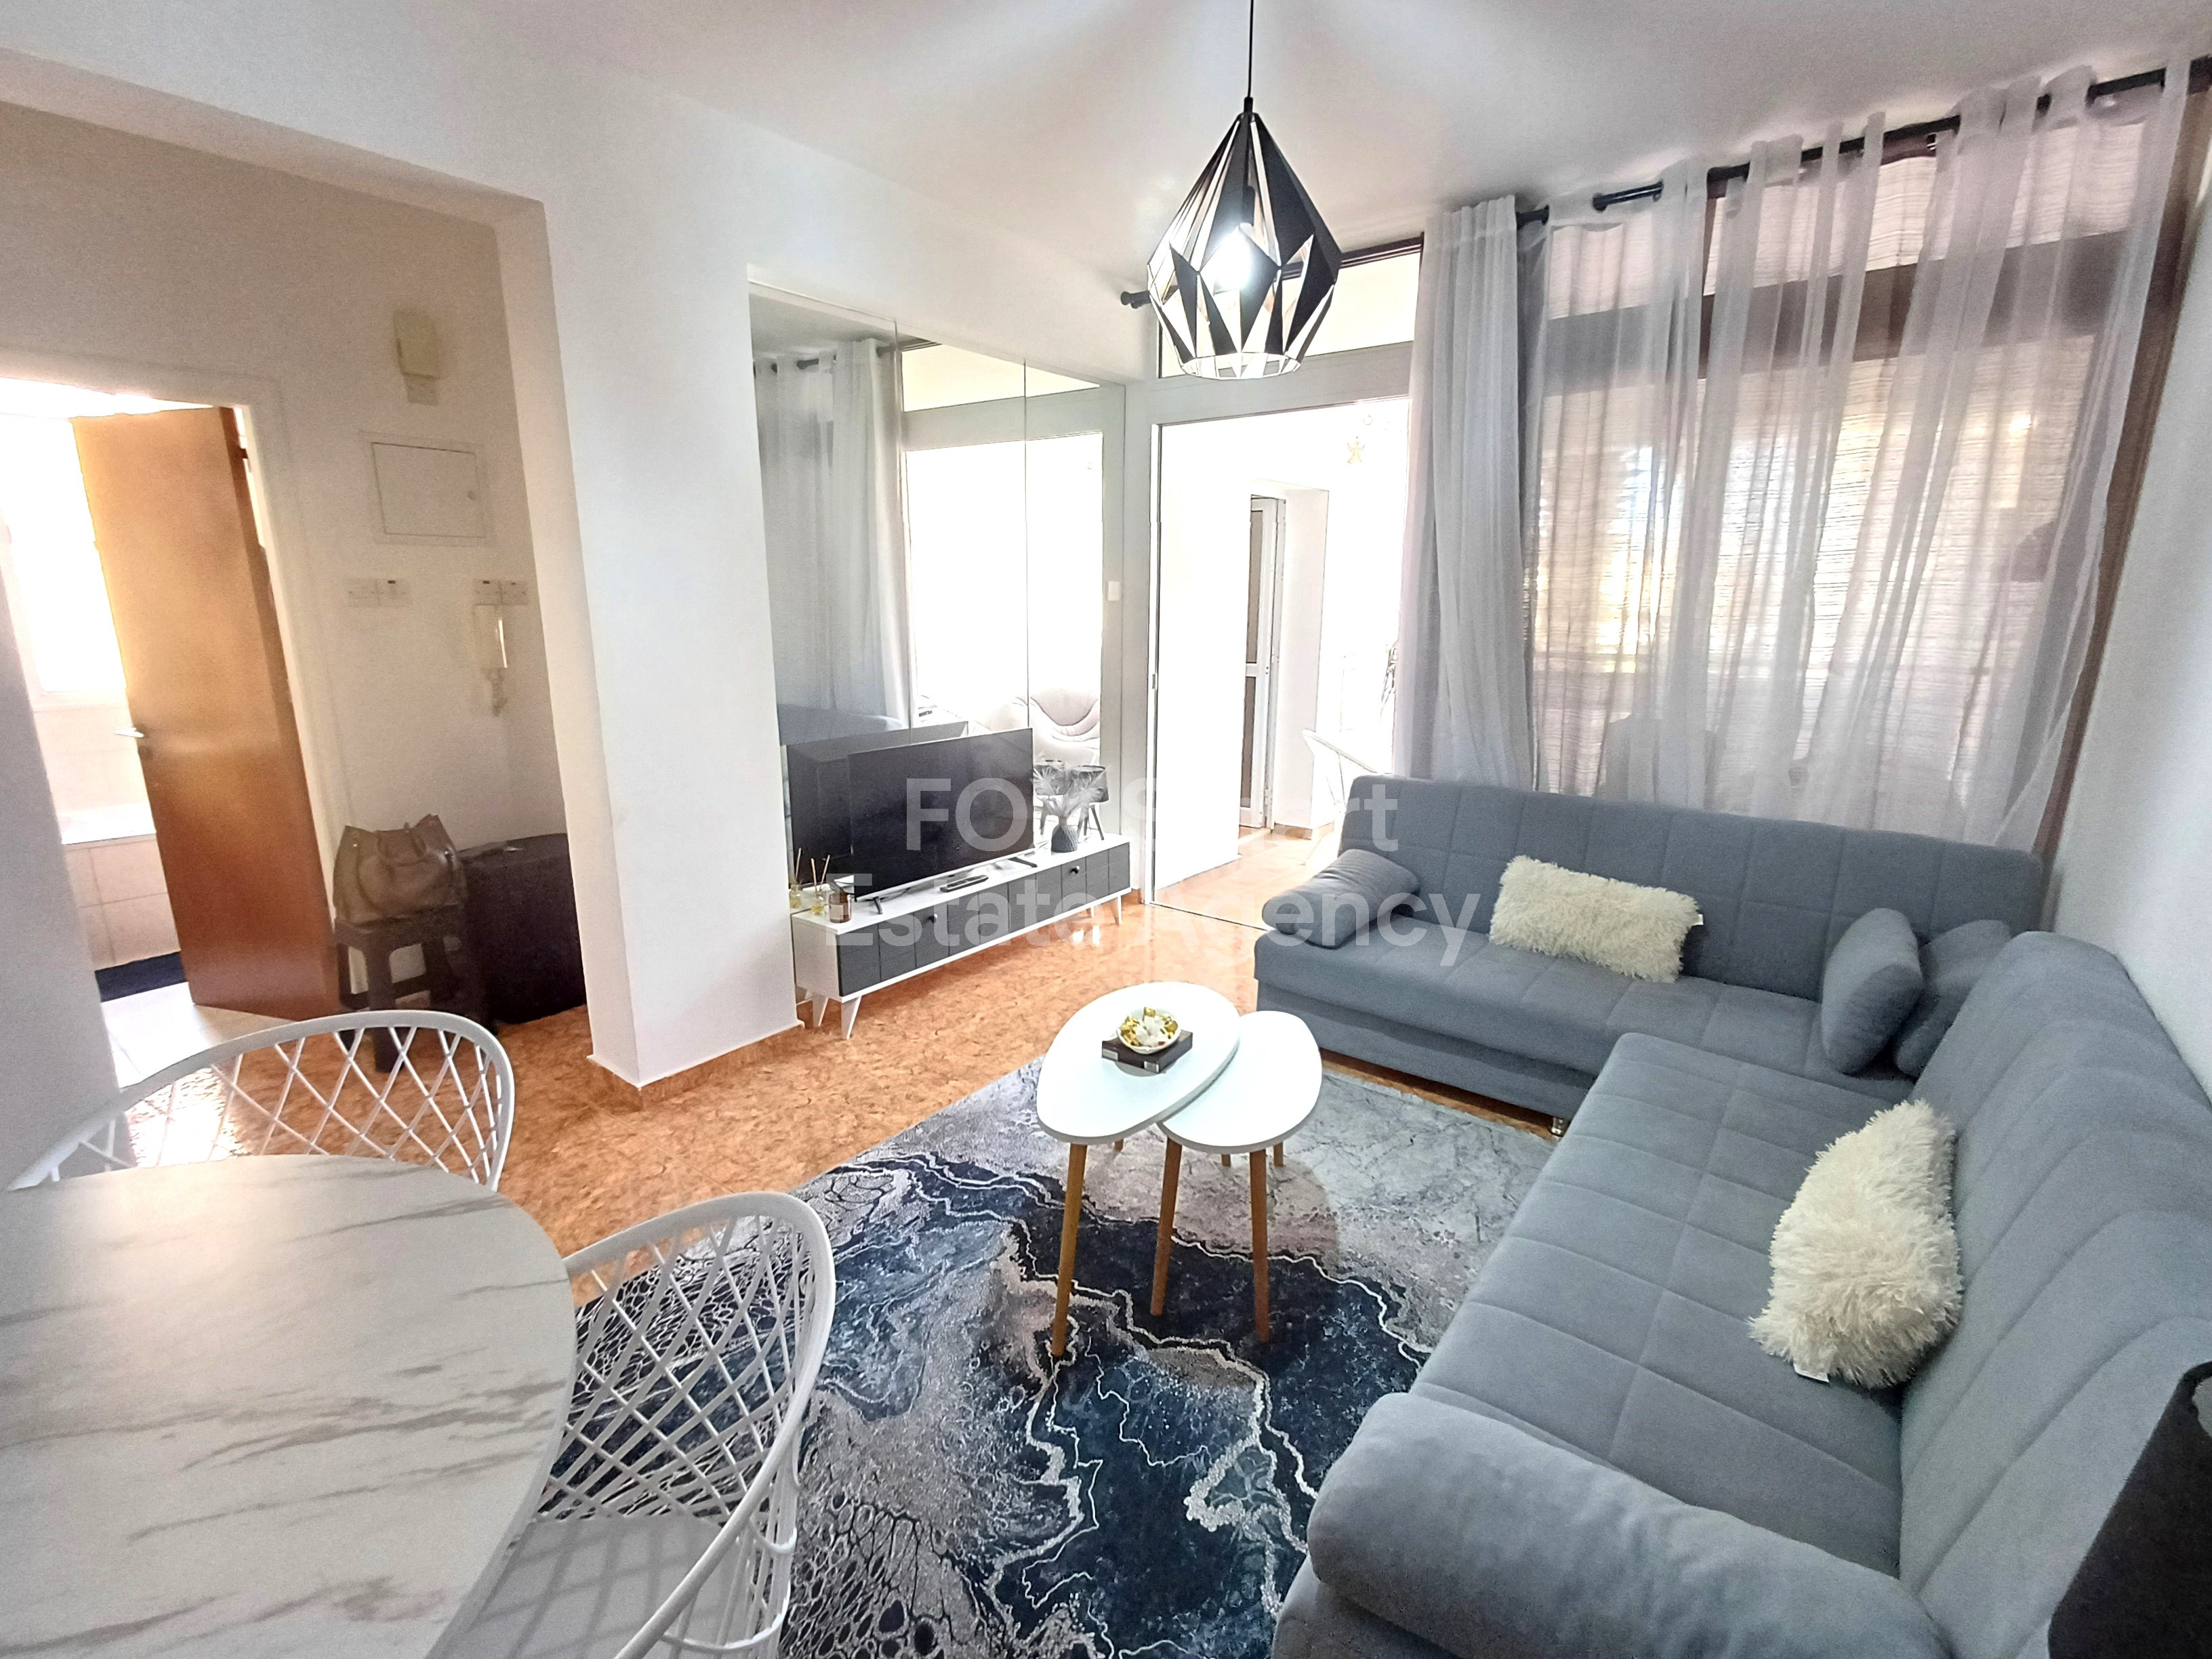 Apartment, For Sale, Larnaca, Perivolia  2 Bedrooms 1 Bathro.....